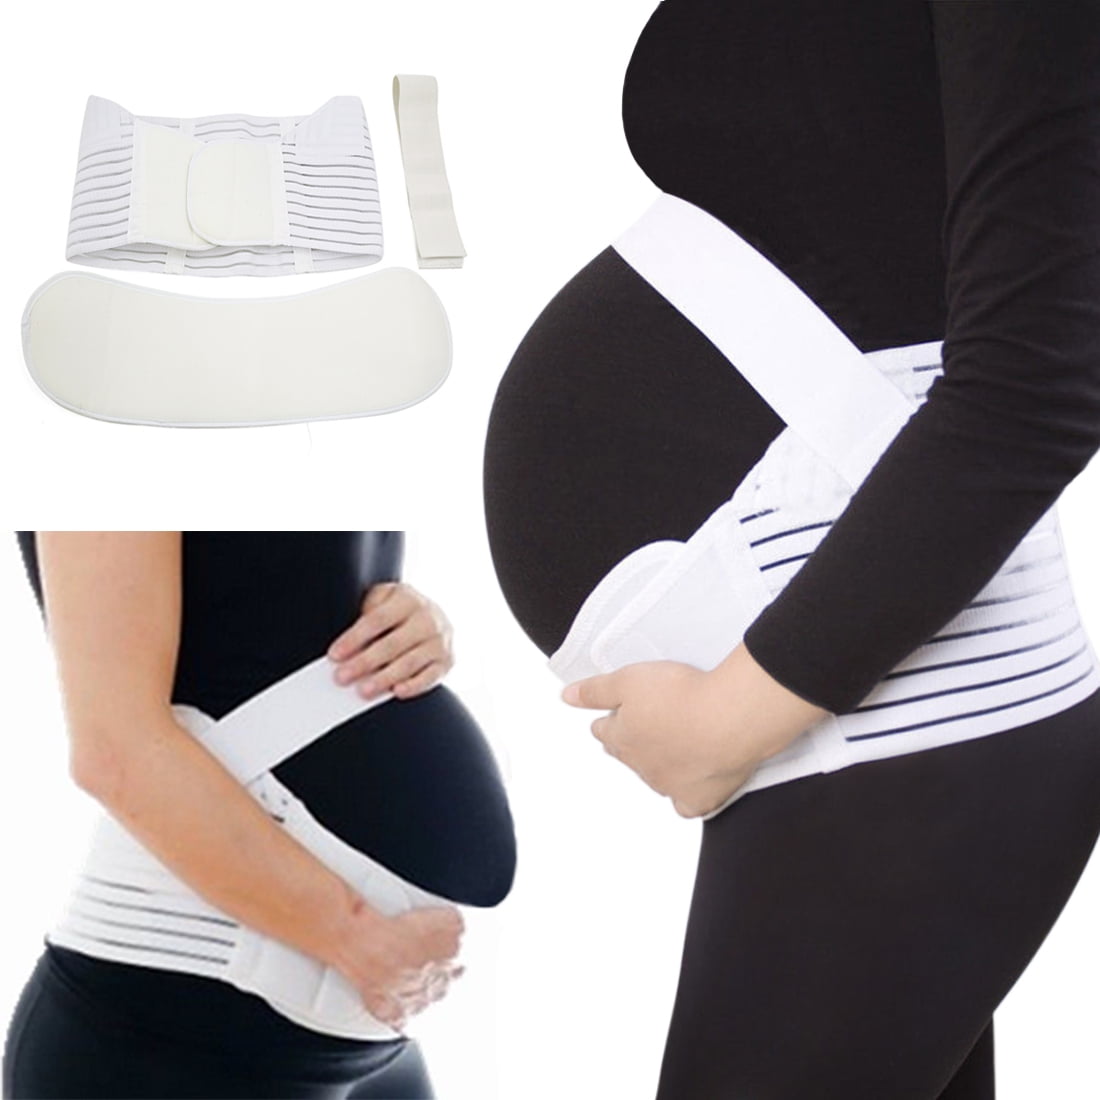 NEW Prenatal Cradle Maternity Support Belt Erase Abdominal & Sciatic Pain 